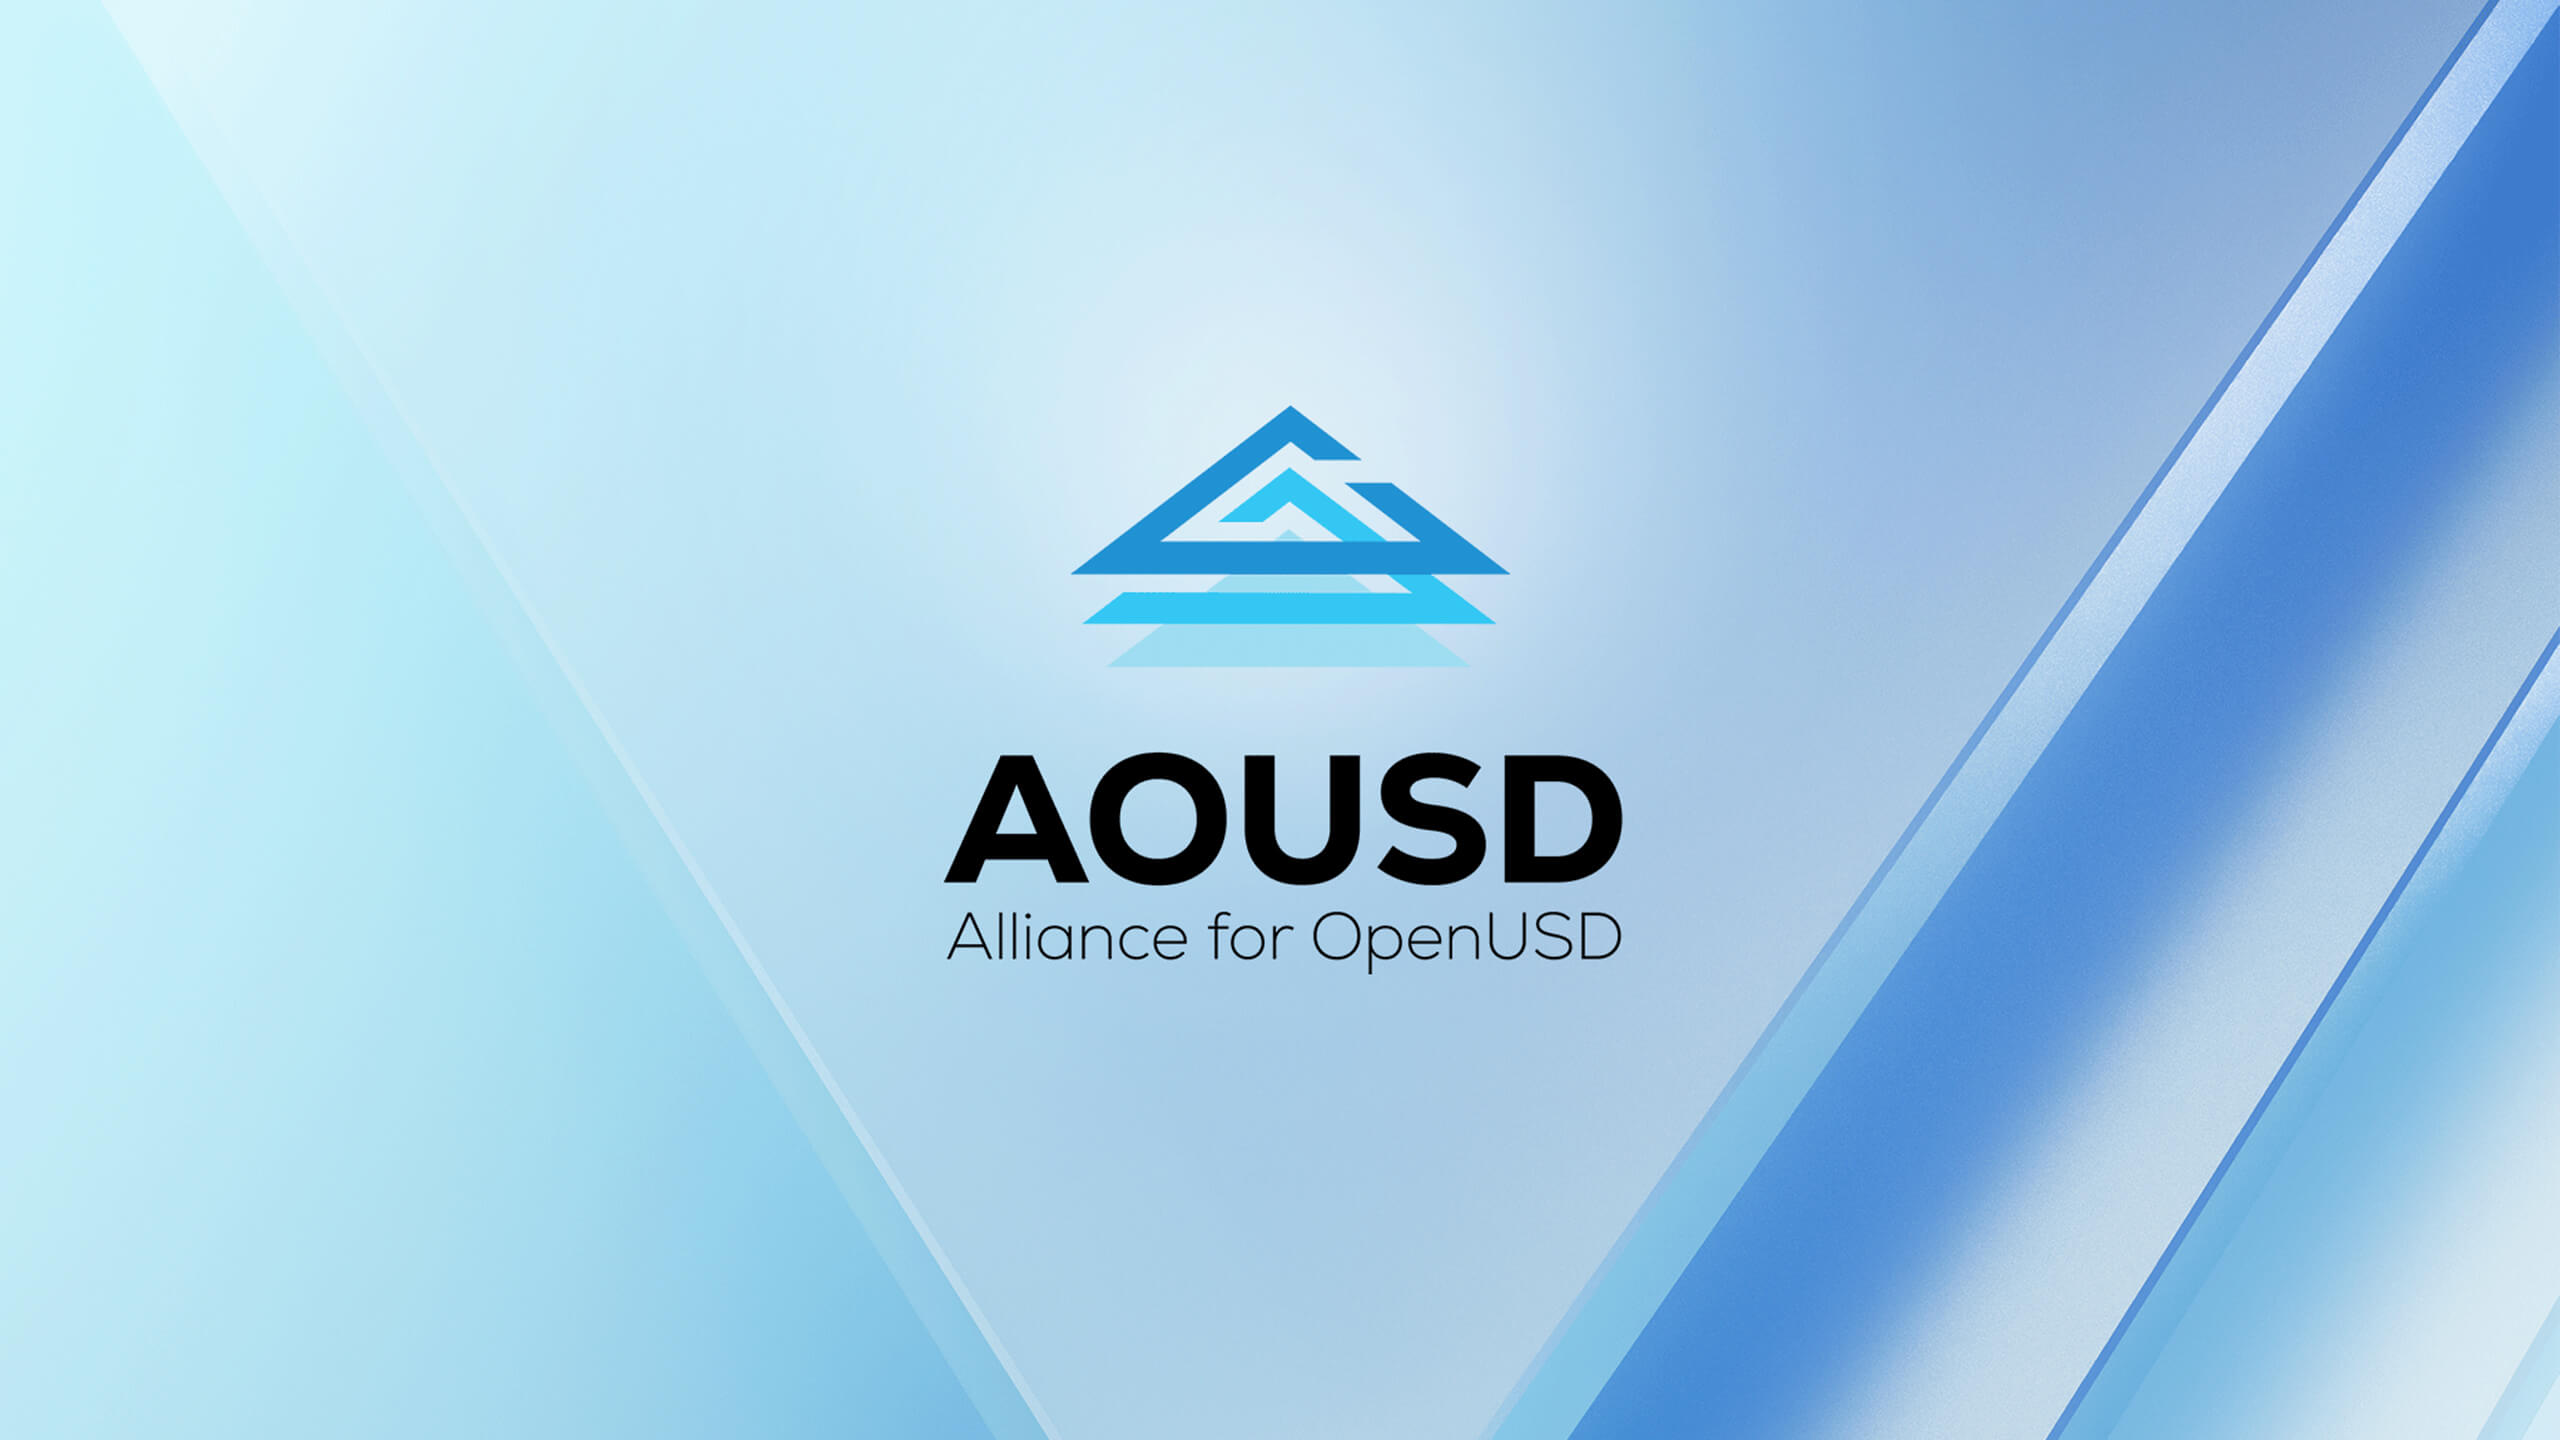 Alliance for OpenUSD Announces Roadmap